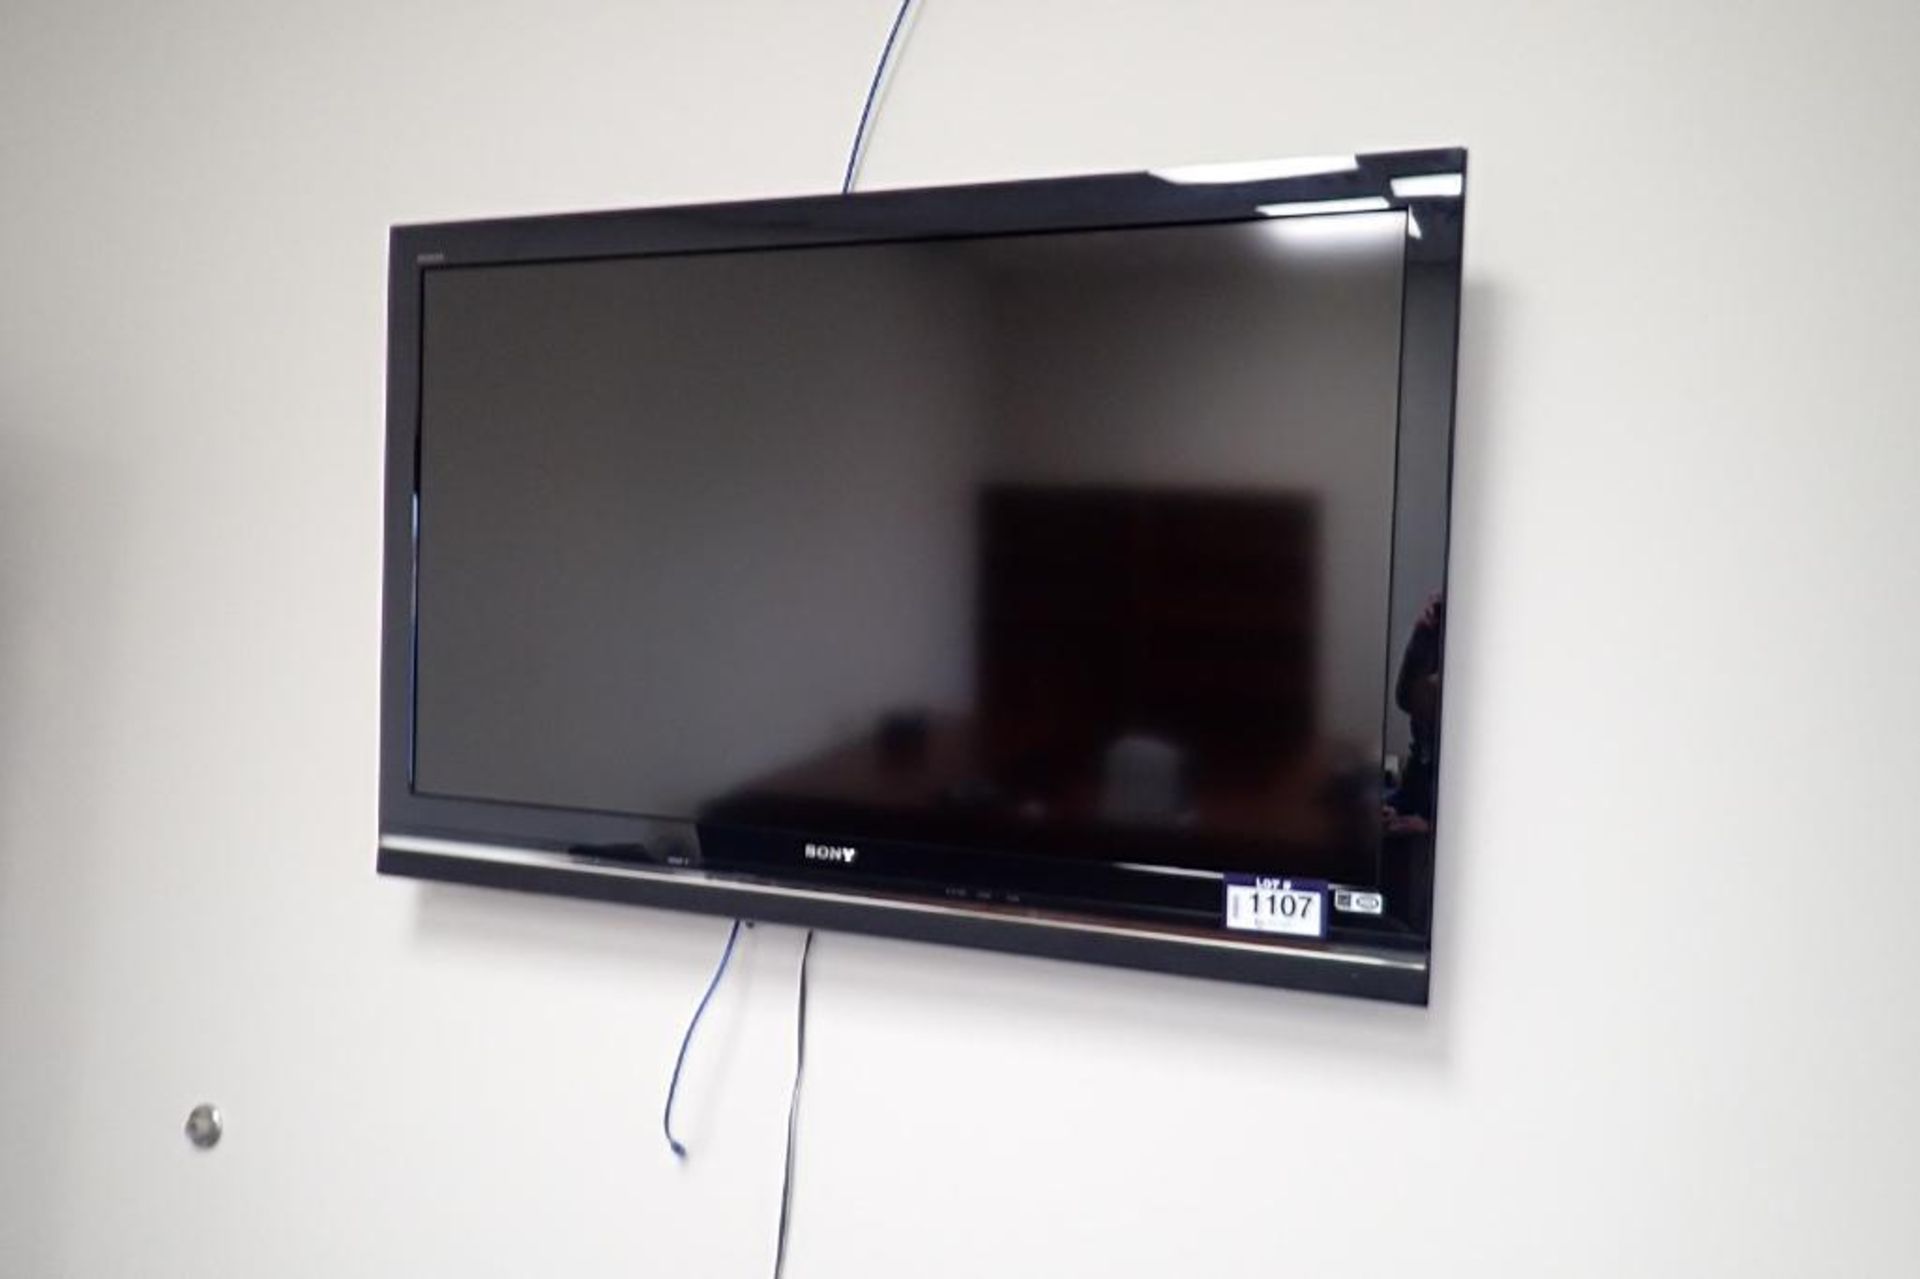 Sony Bravia 52" Flatscreen Television w/ Wall Mount. **NO REMOTE**